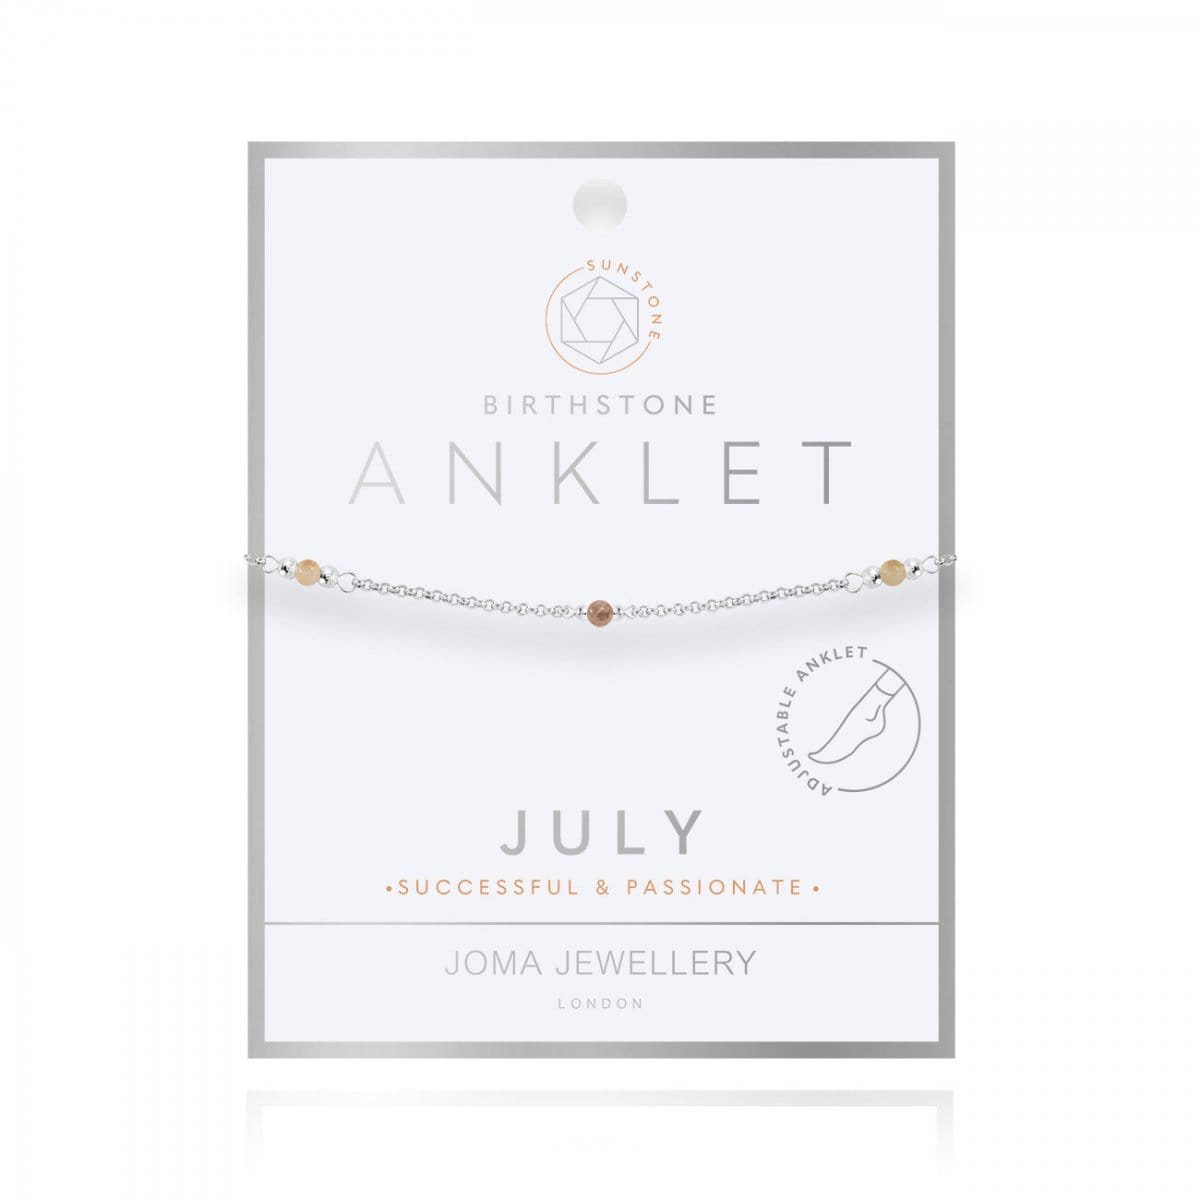 Joma Jewellery Anklet Joma Jewellery Anklet - Birthstone - July - Sunstone